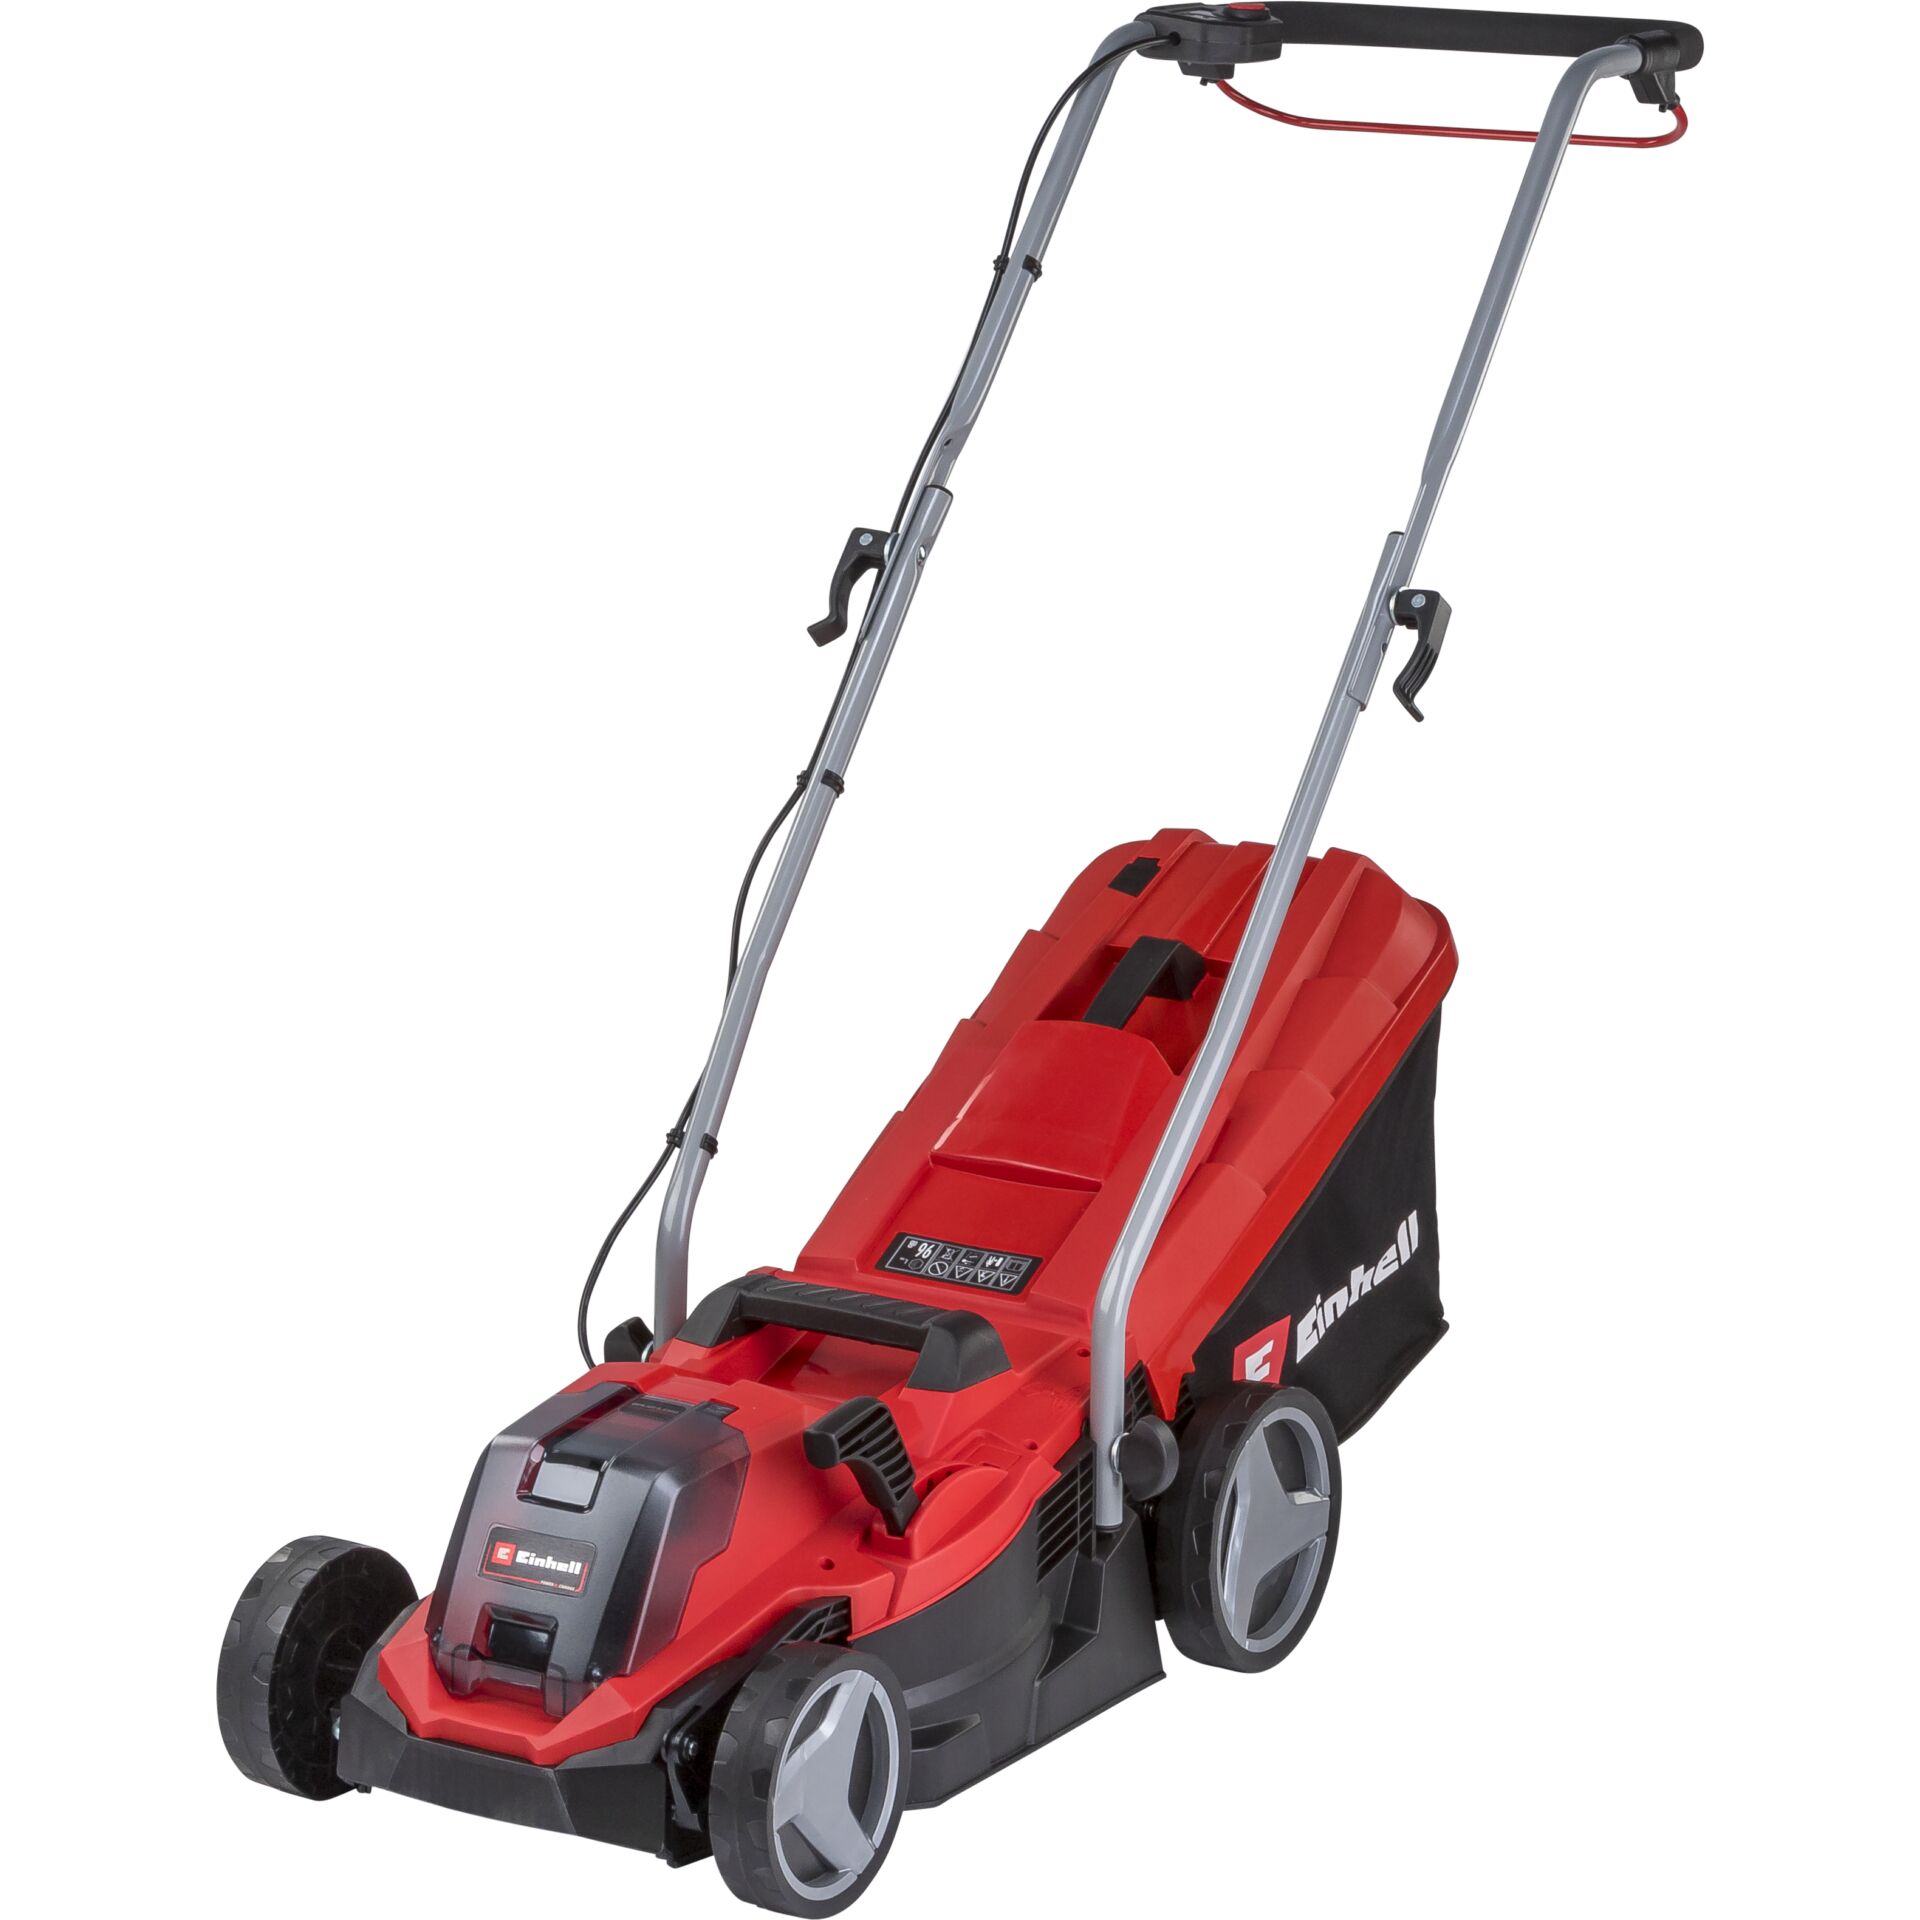 Einhell GE-CM 18/33 Li (1x4,0Ah) lawn mower Walk behind lawn mower Battery Black, Red